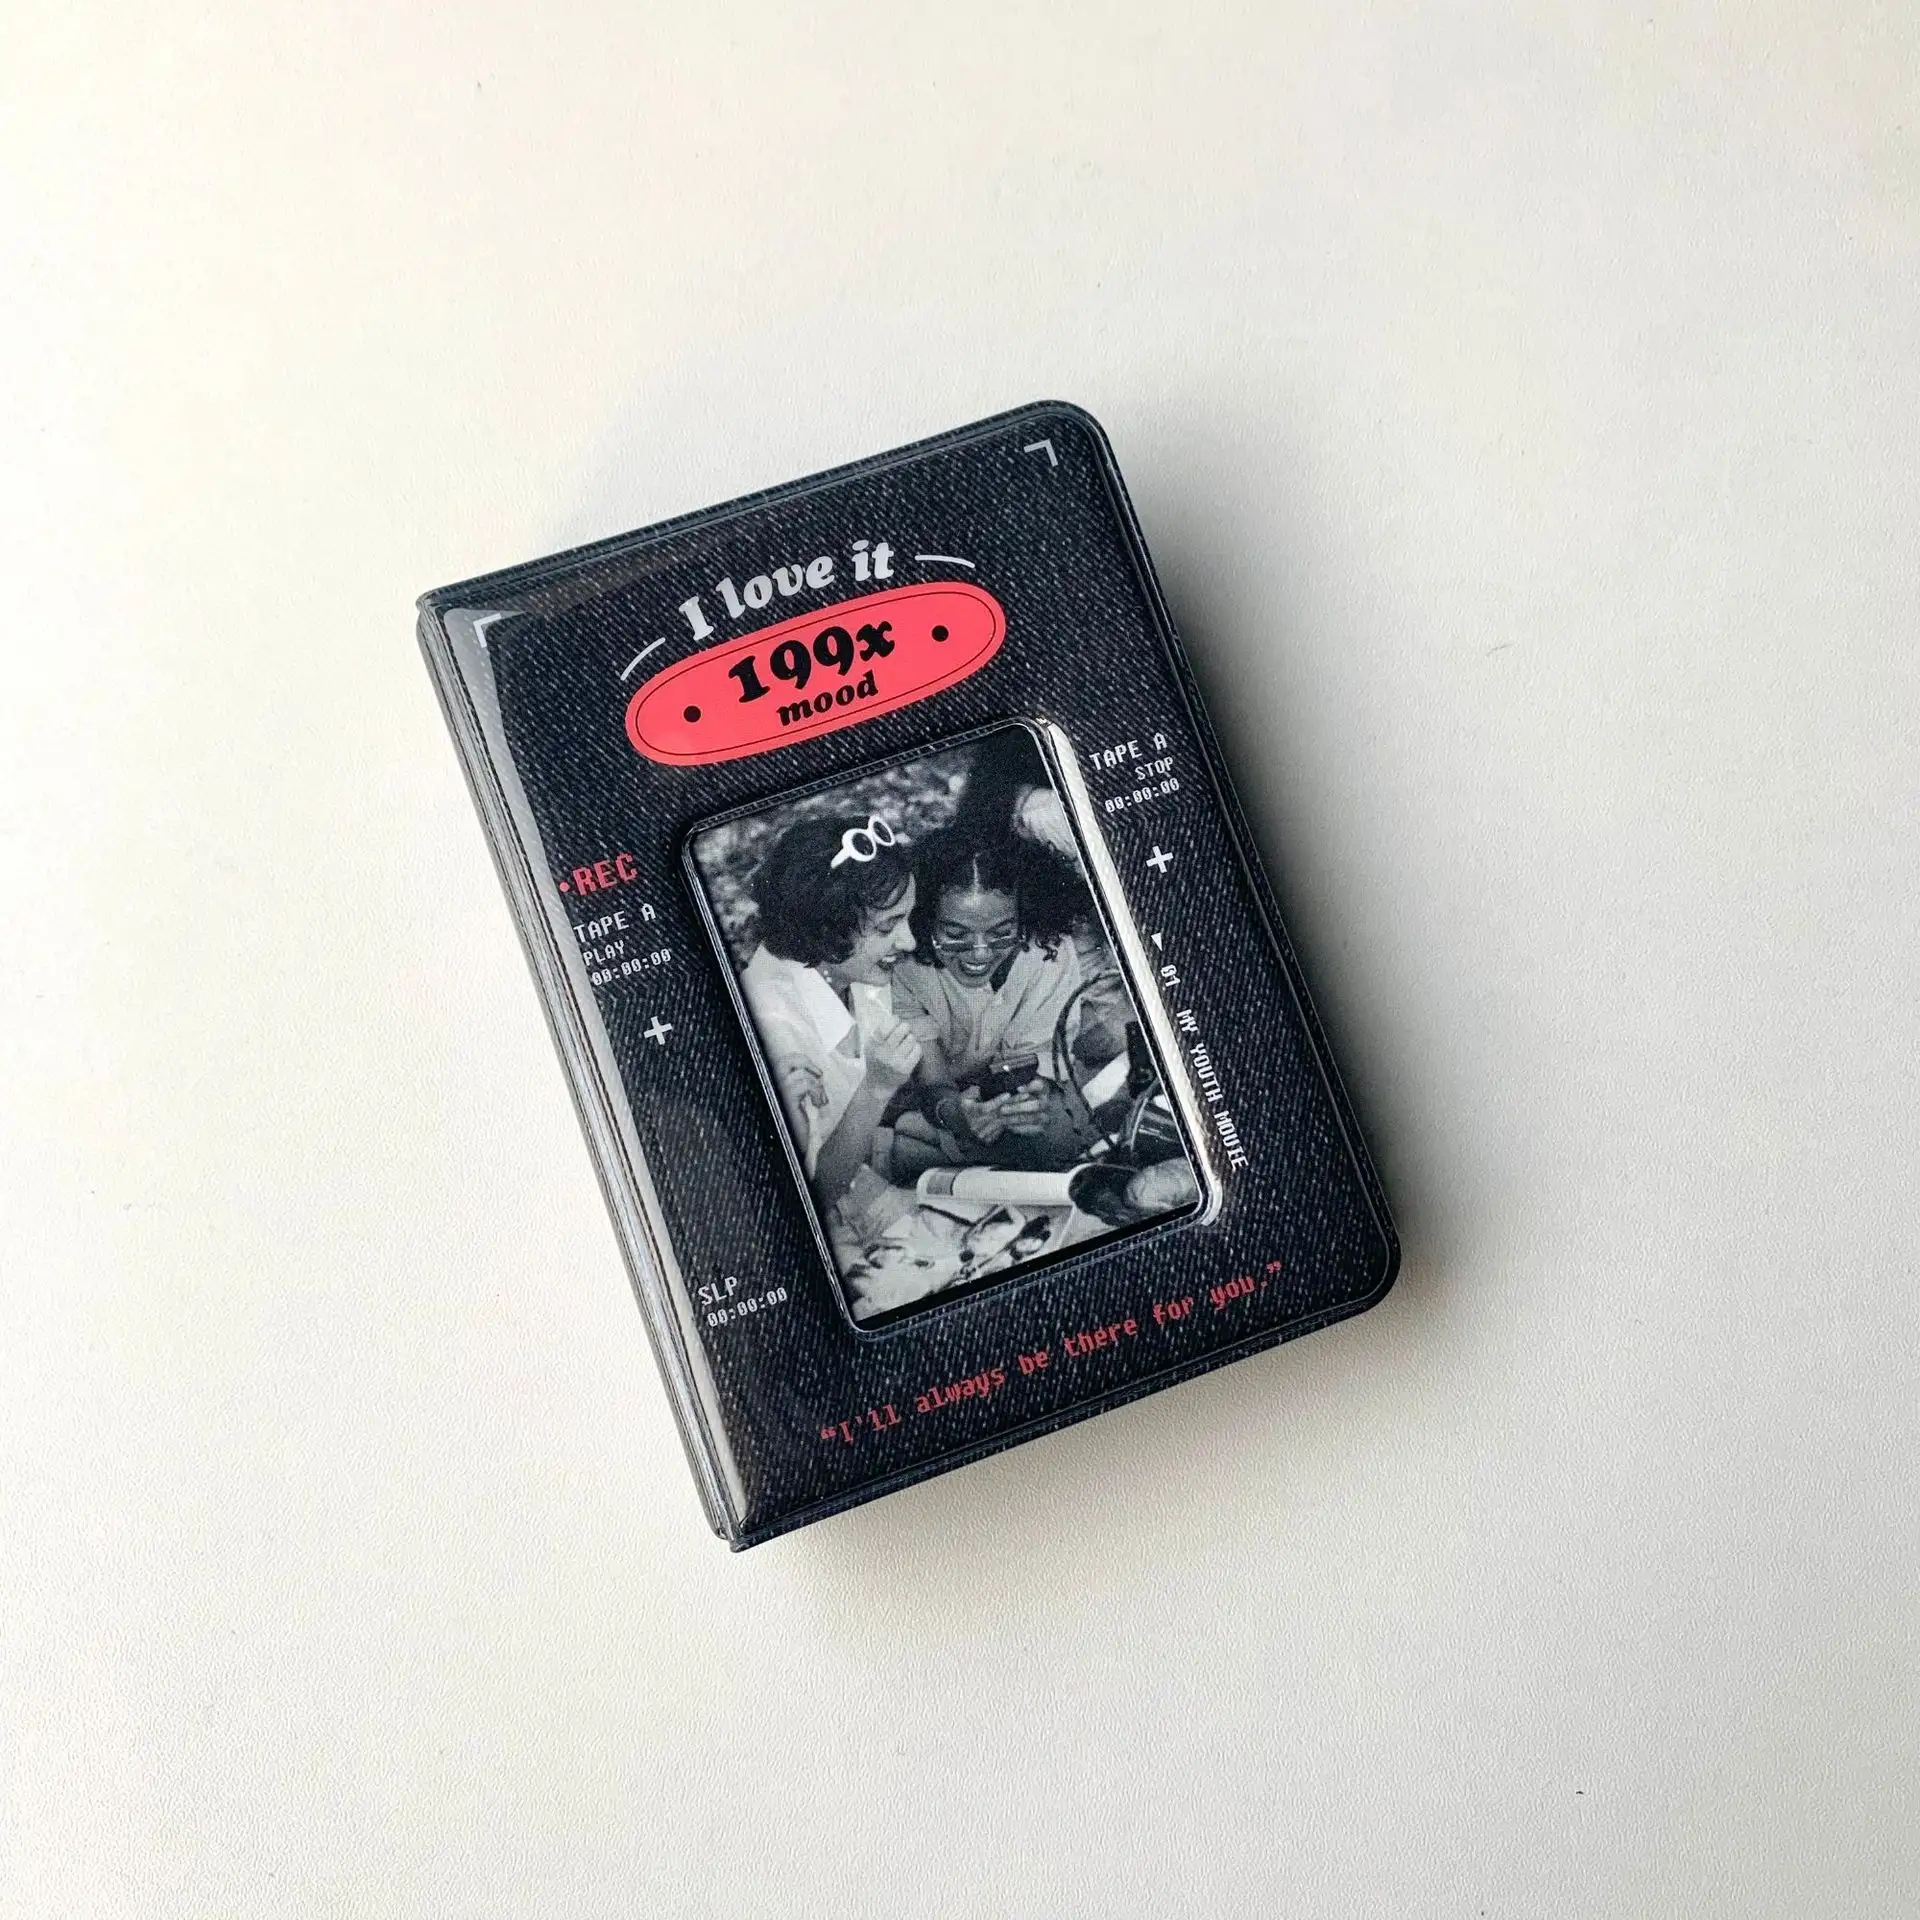 Instagram סגנון רטרו שחור 3 אינץ מיידי תמונה אלבום אוסף ספר חלול החוצה pvc איידול מדבקת כרטיס גלרית